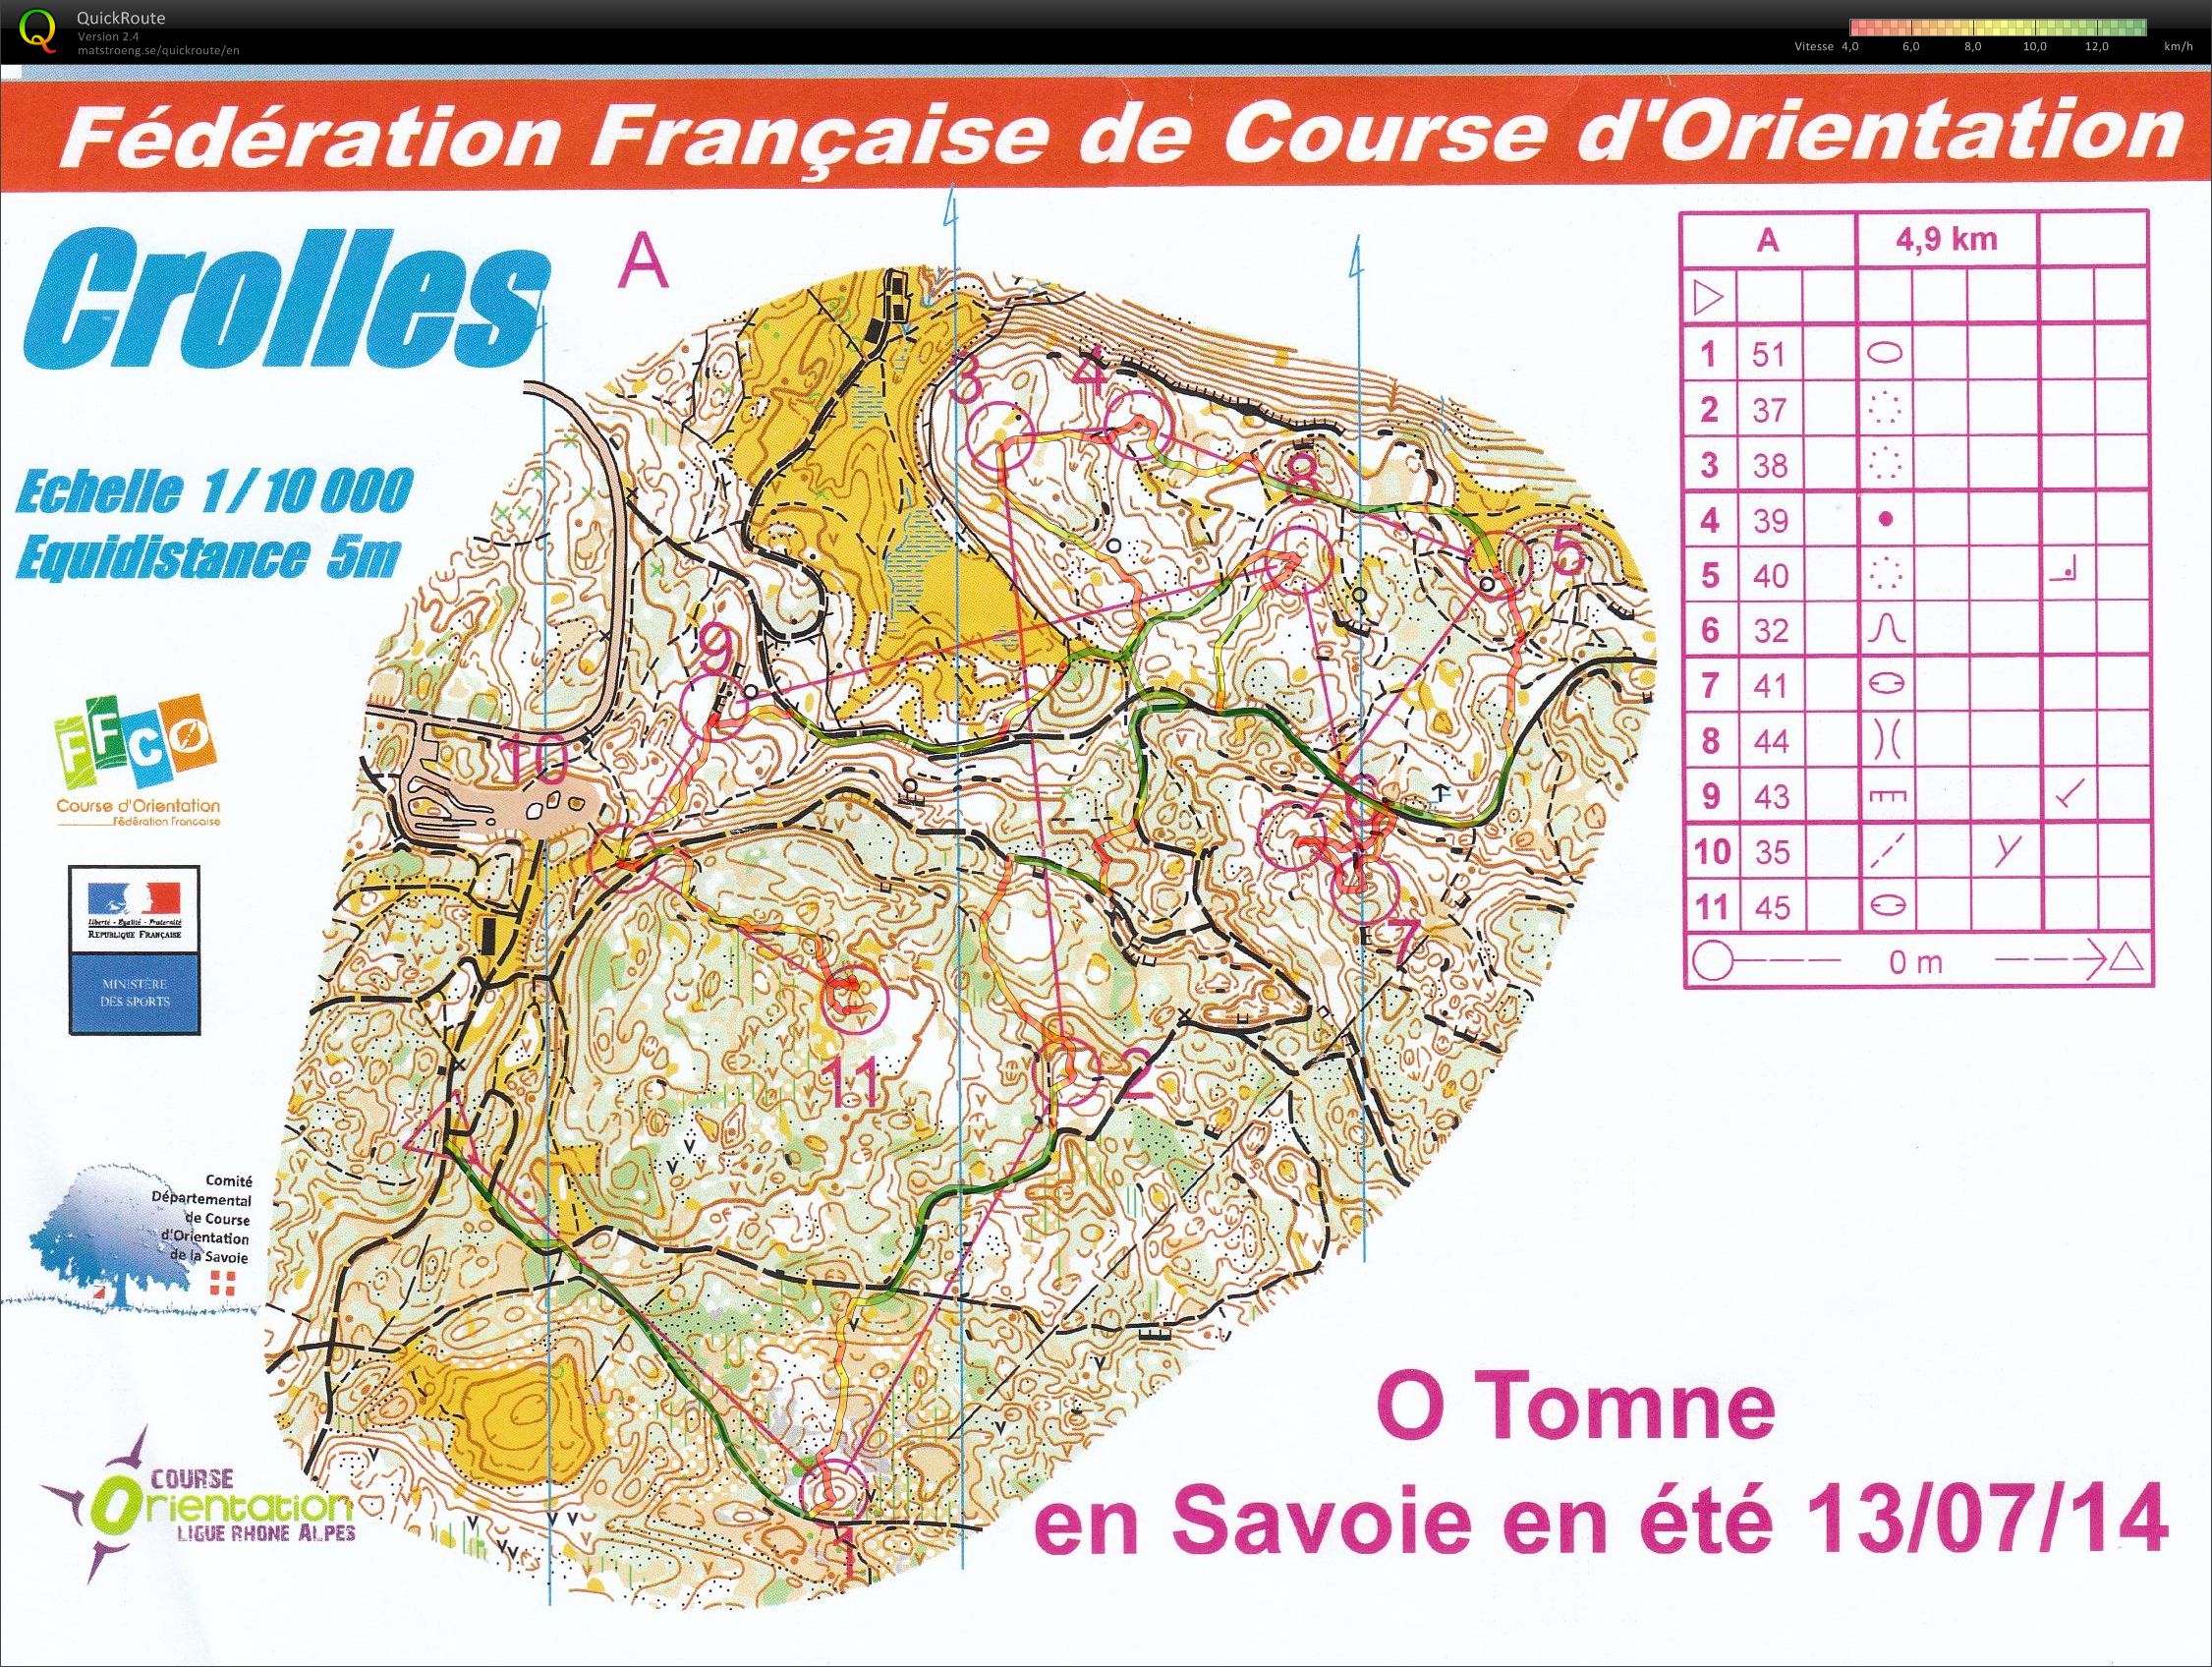 O'Tomne en Savoie Etape 4 (1/2) (13.07.2014)